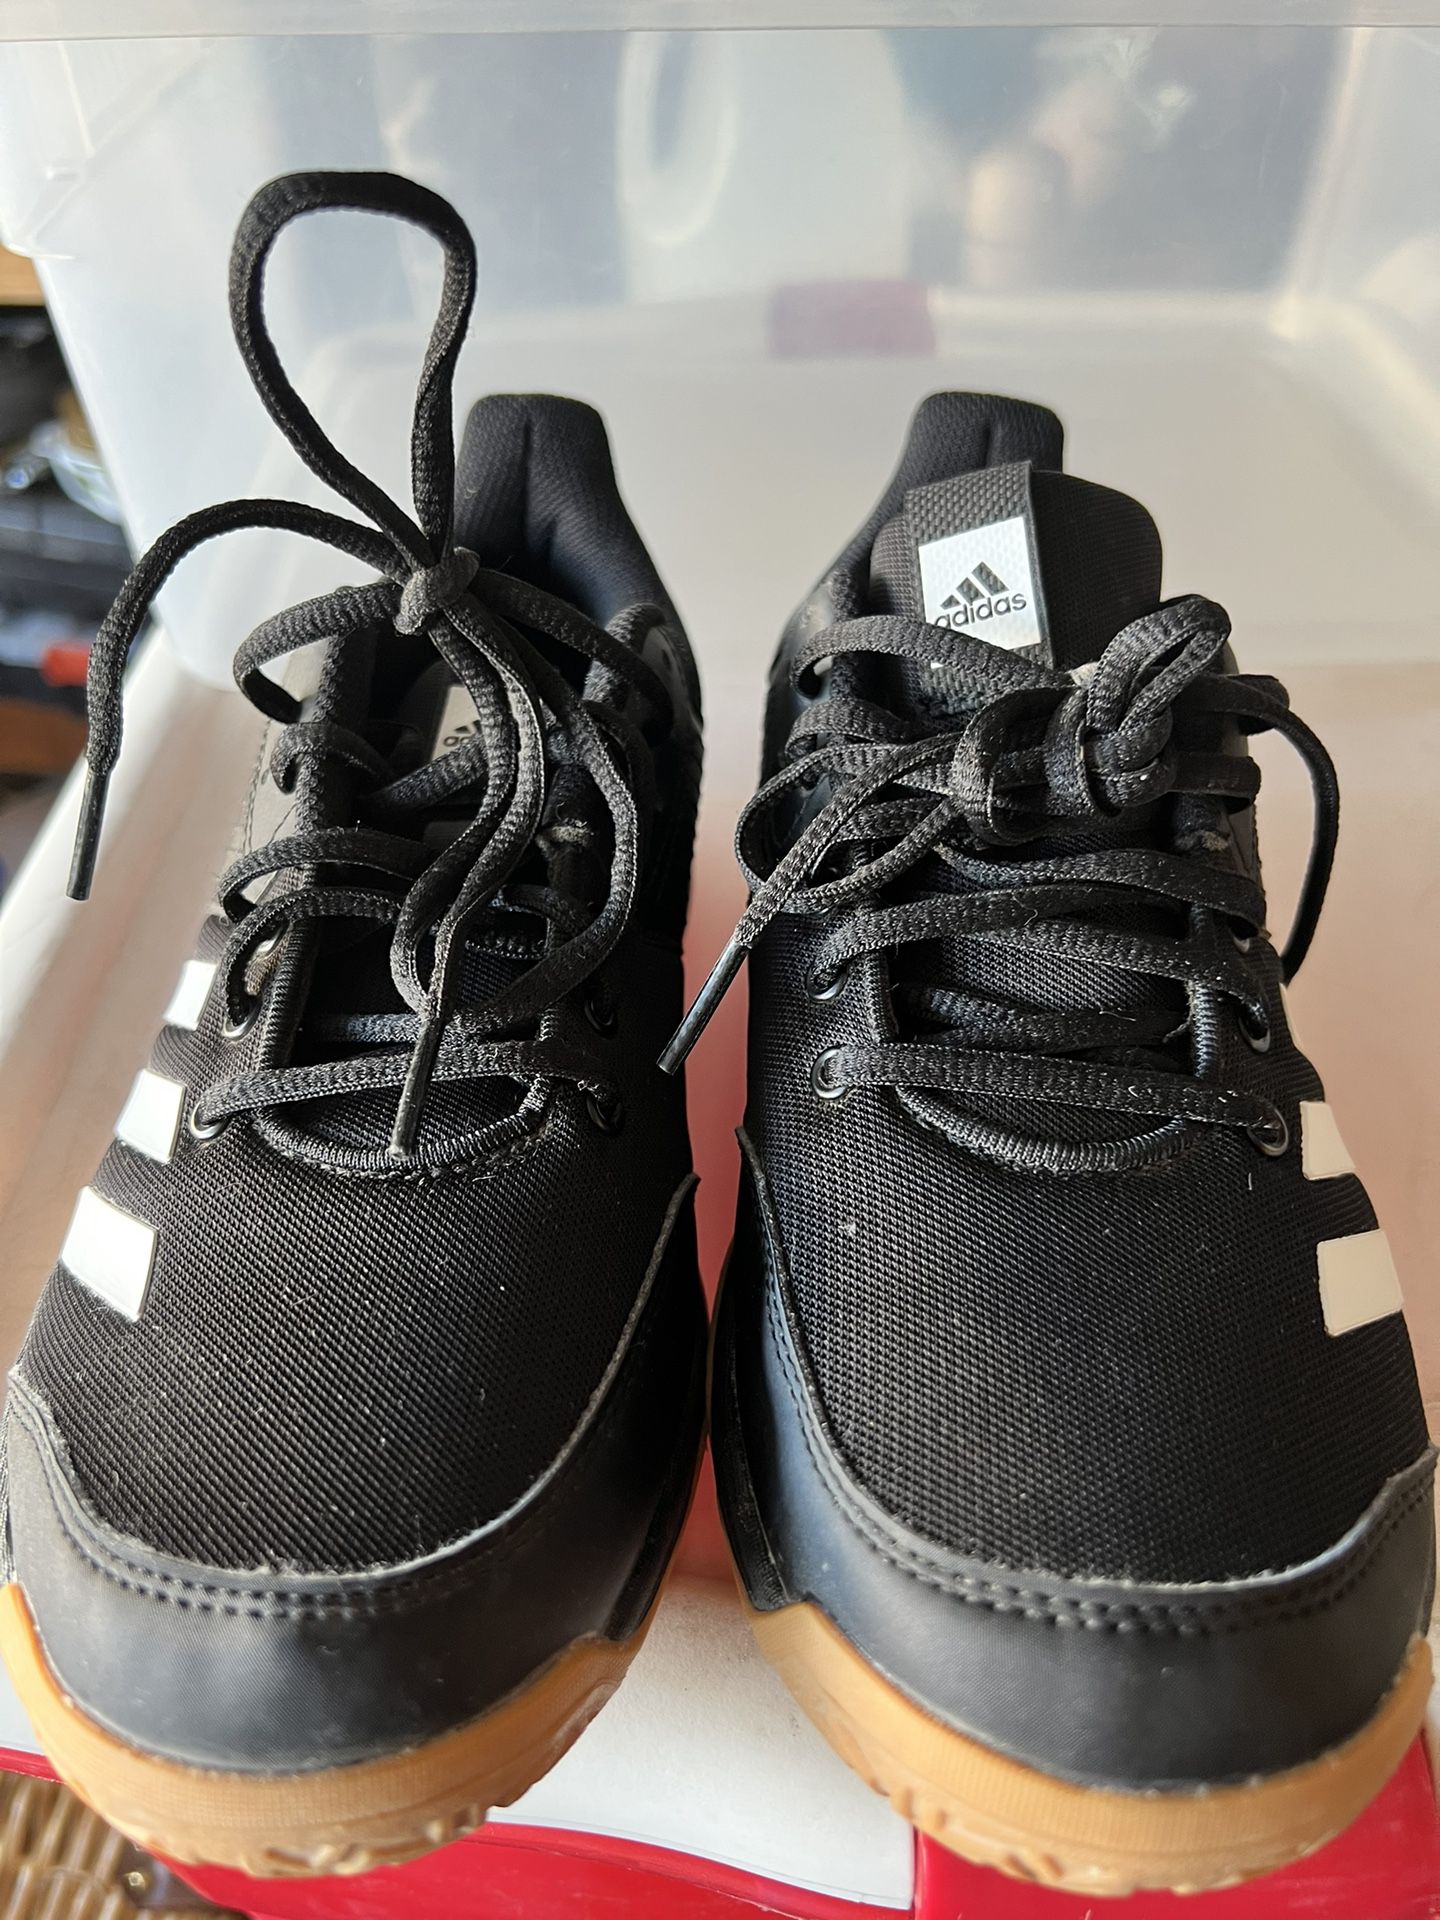 Adidas - Size 6